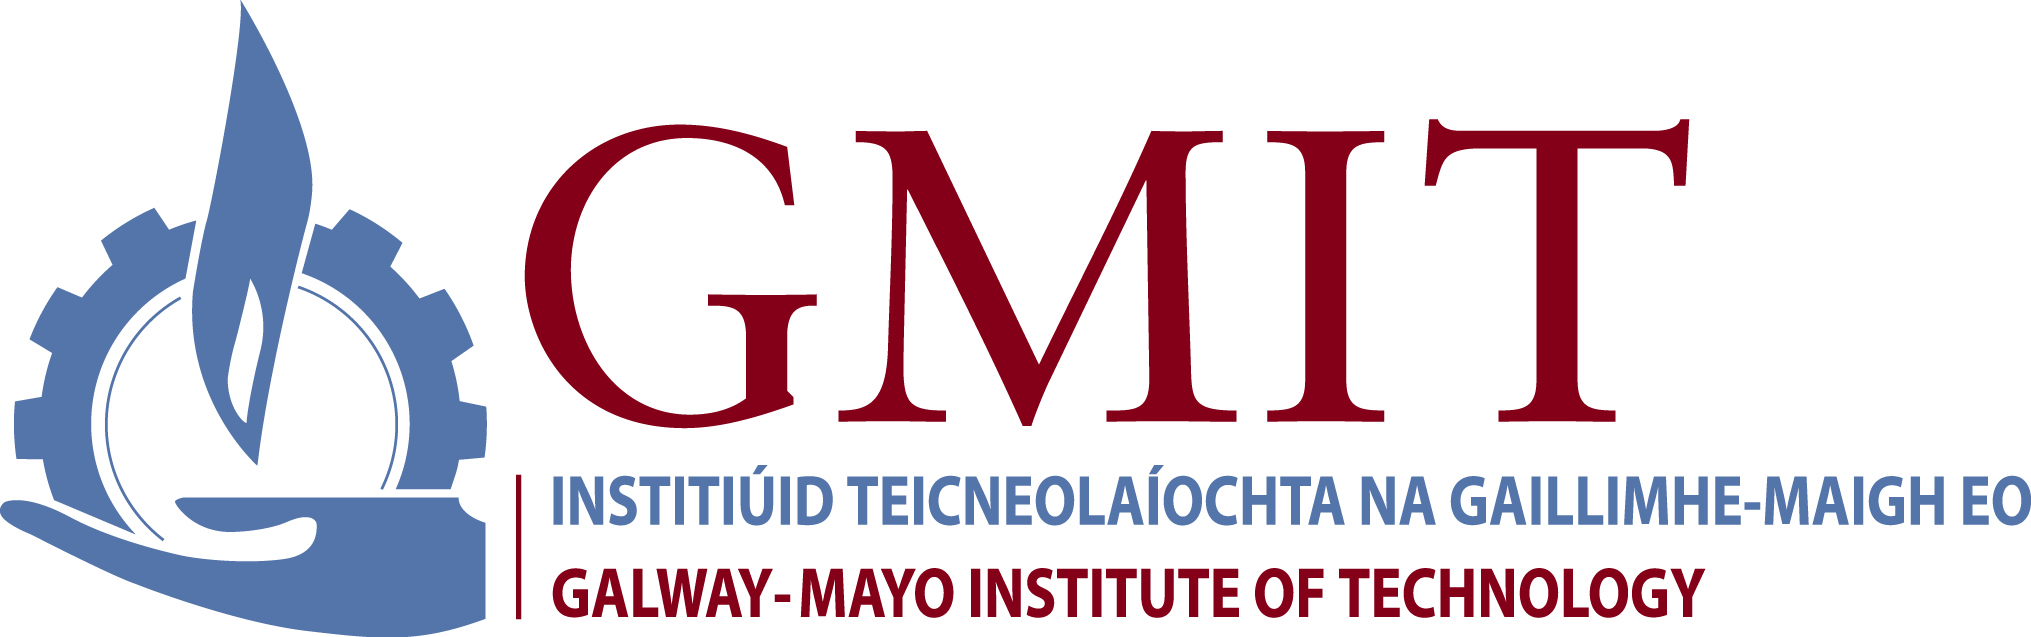 GMIT logo new